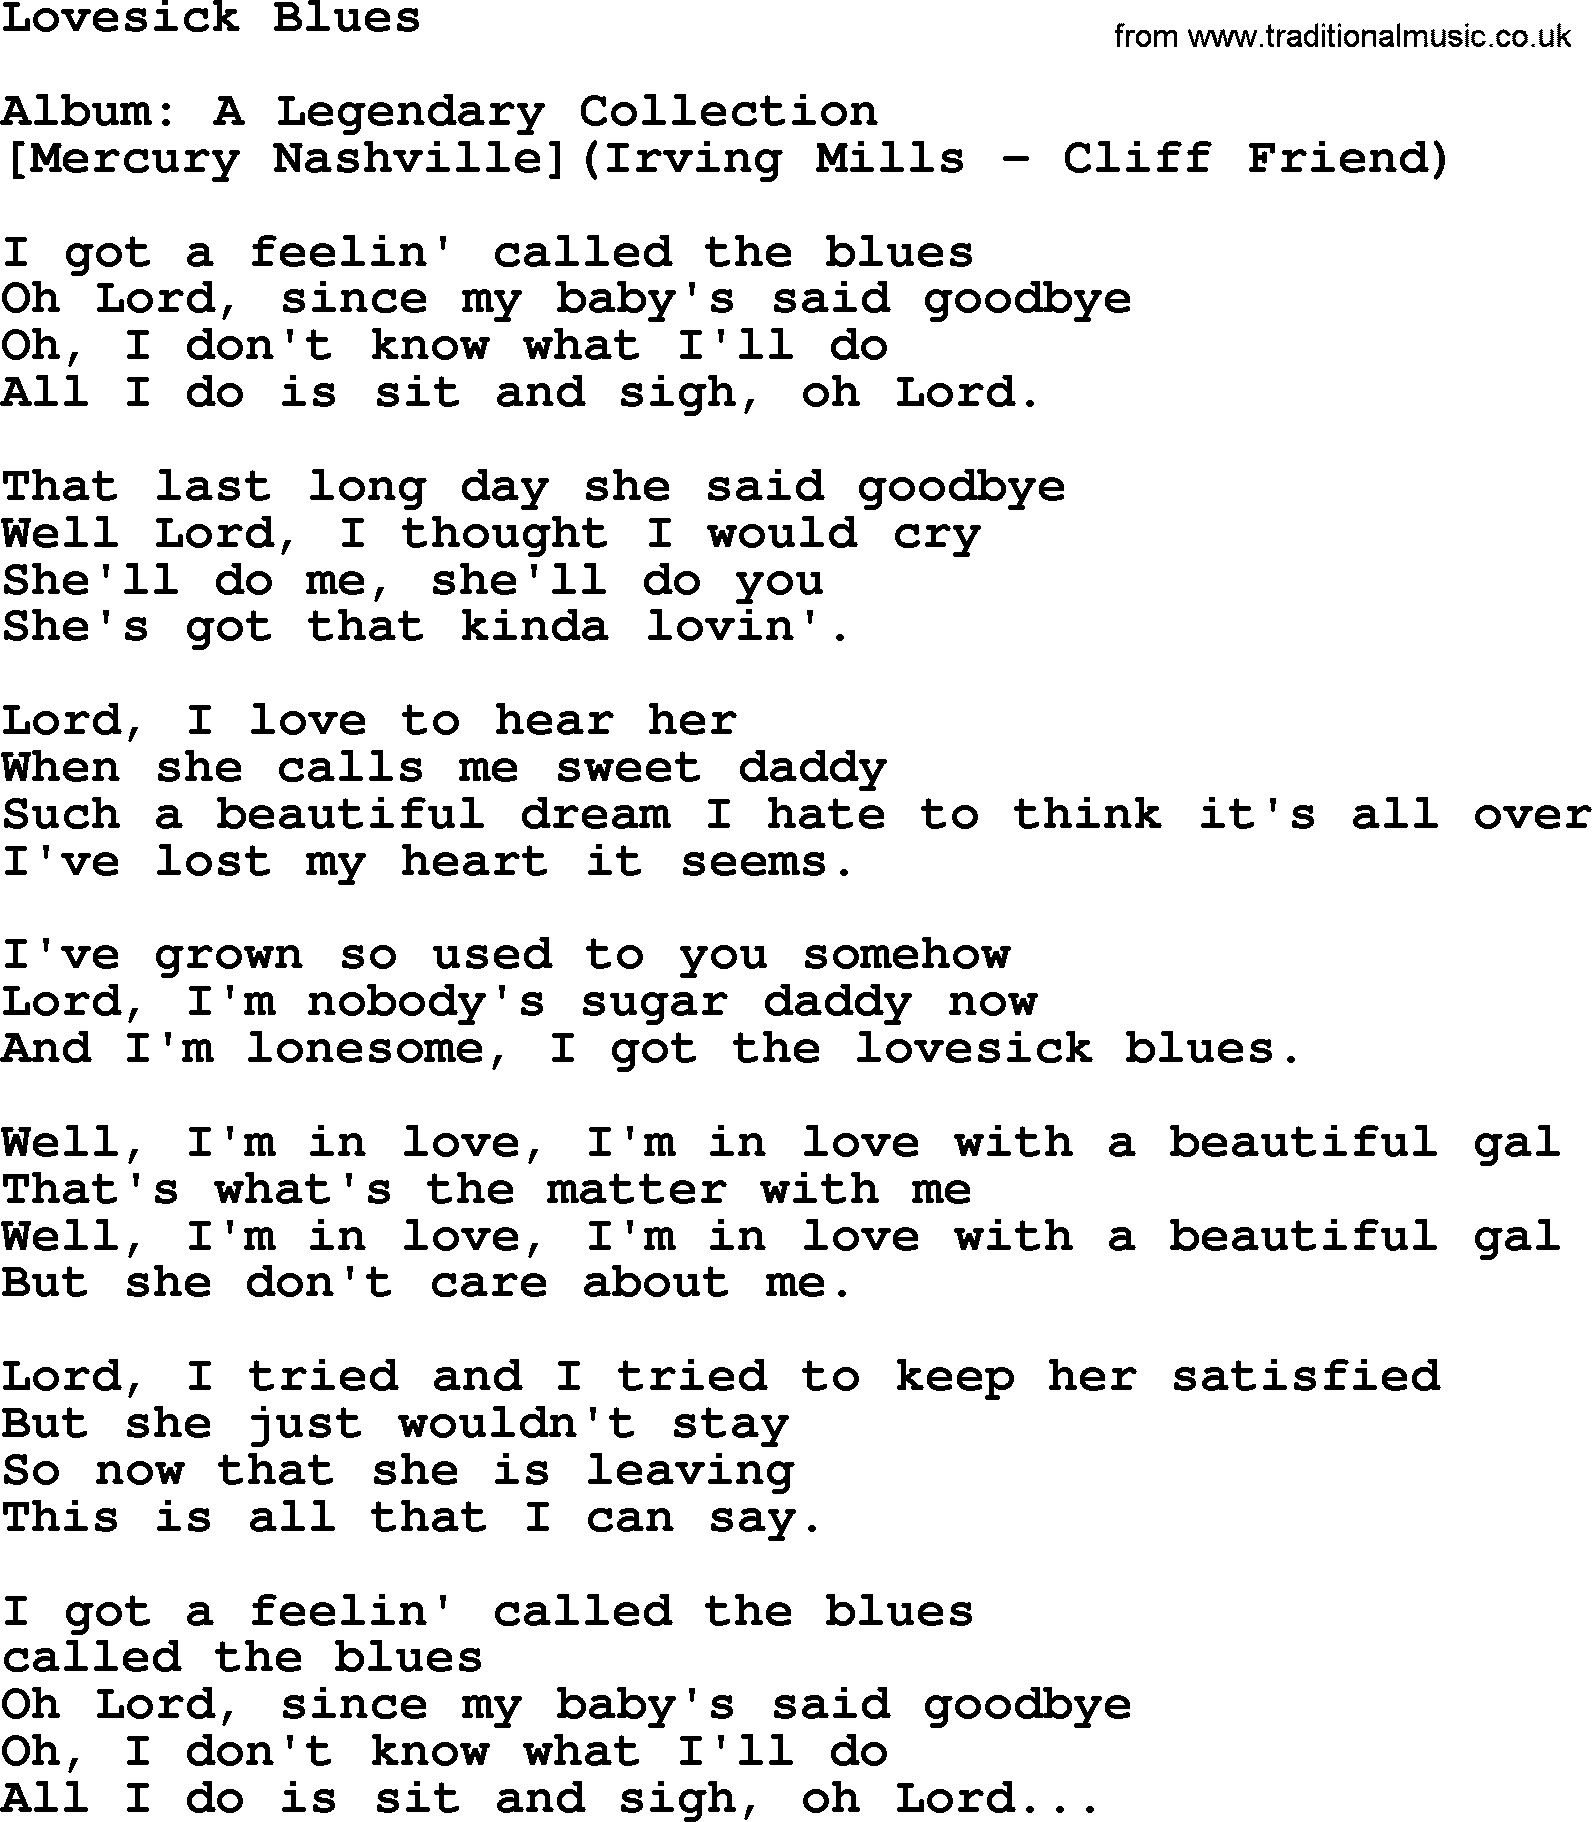 Hank Williams song Lovesick Blues, lyrics